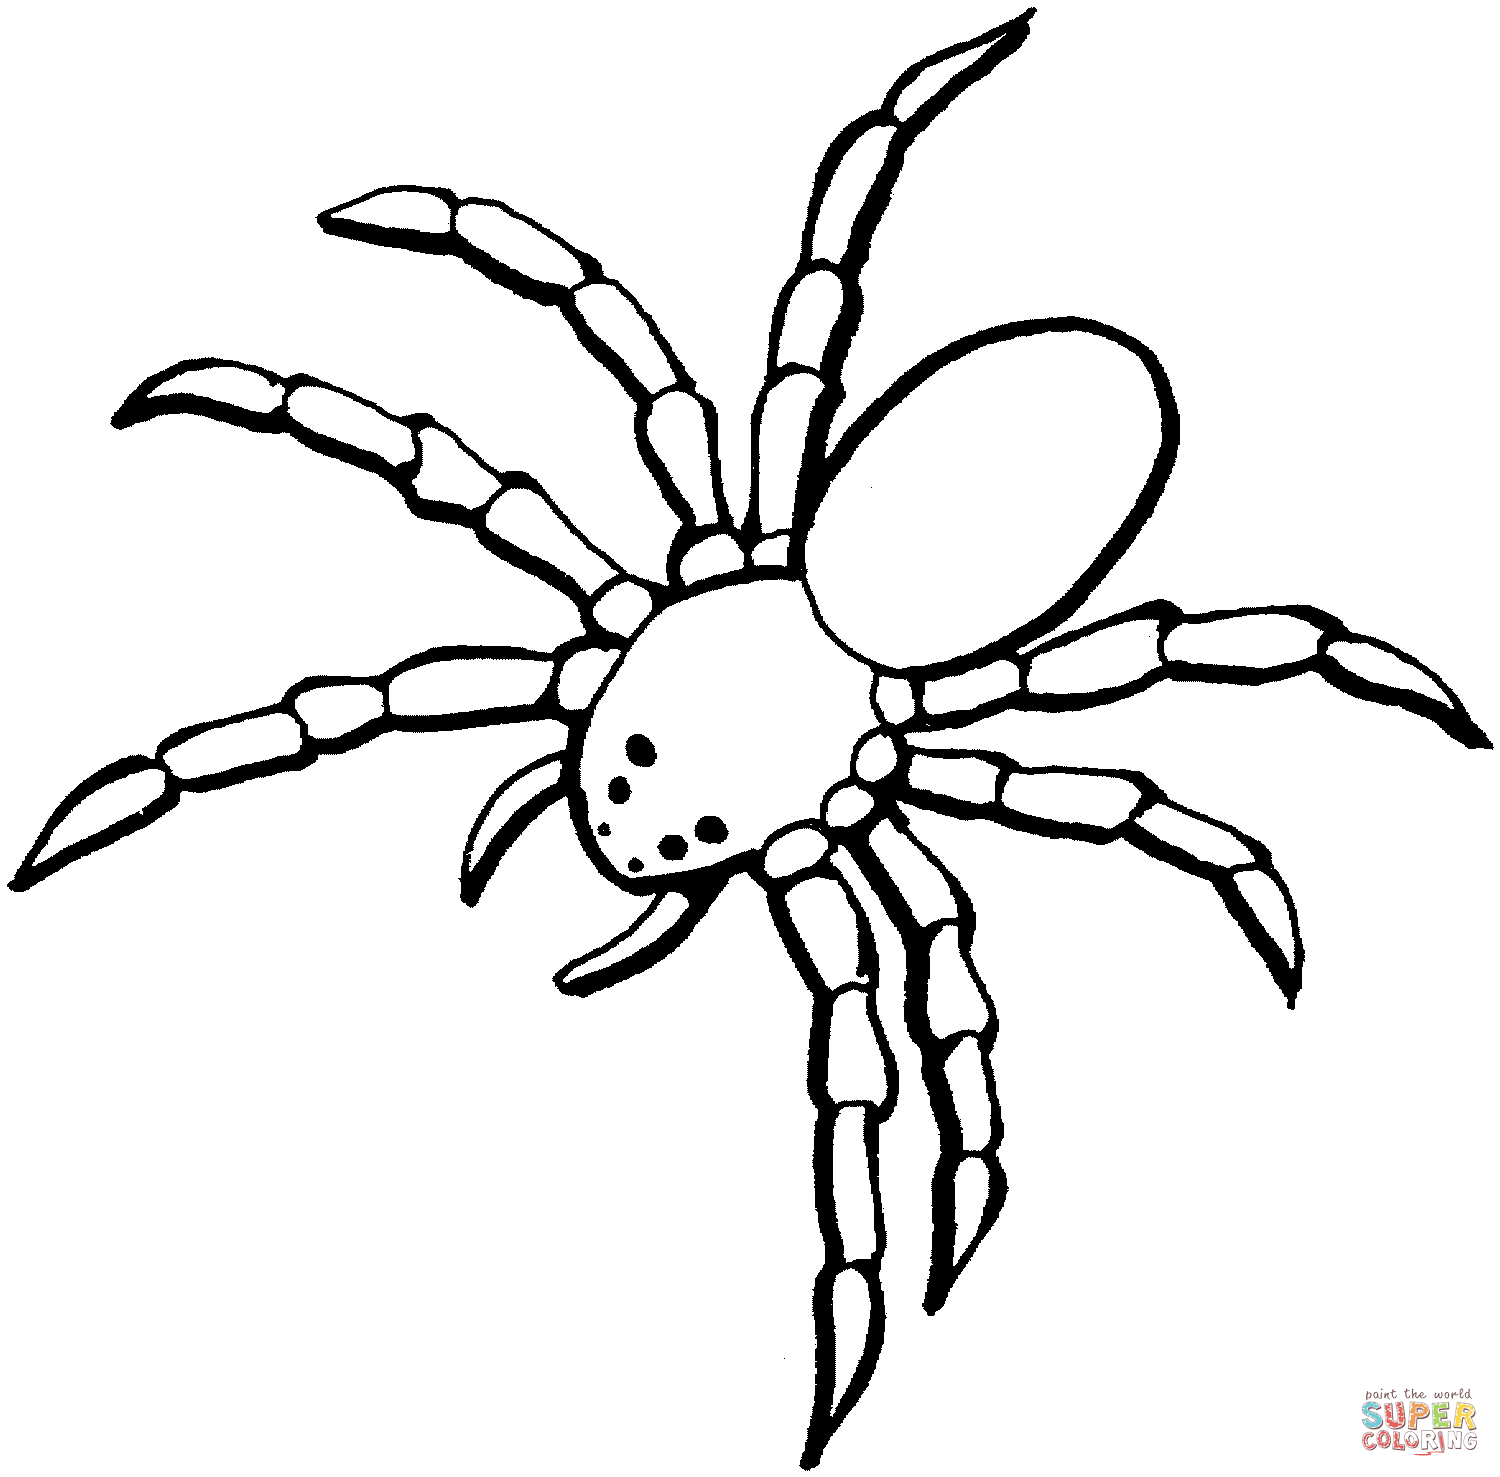 Arachnid coloring #8, Download drawings